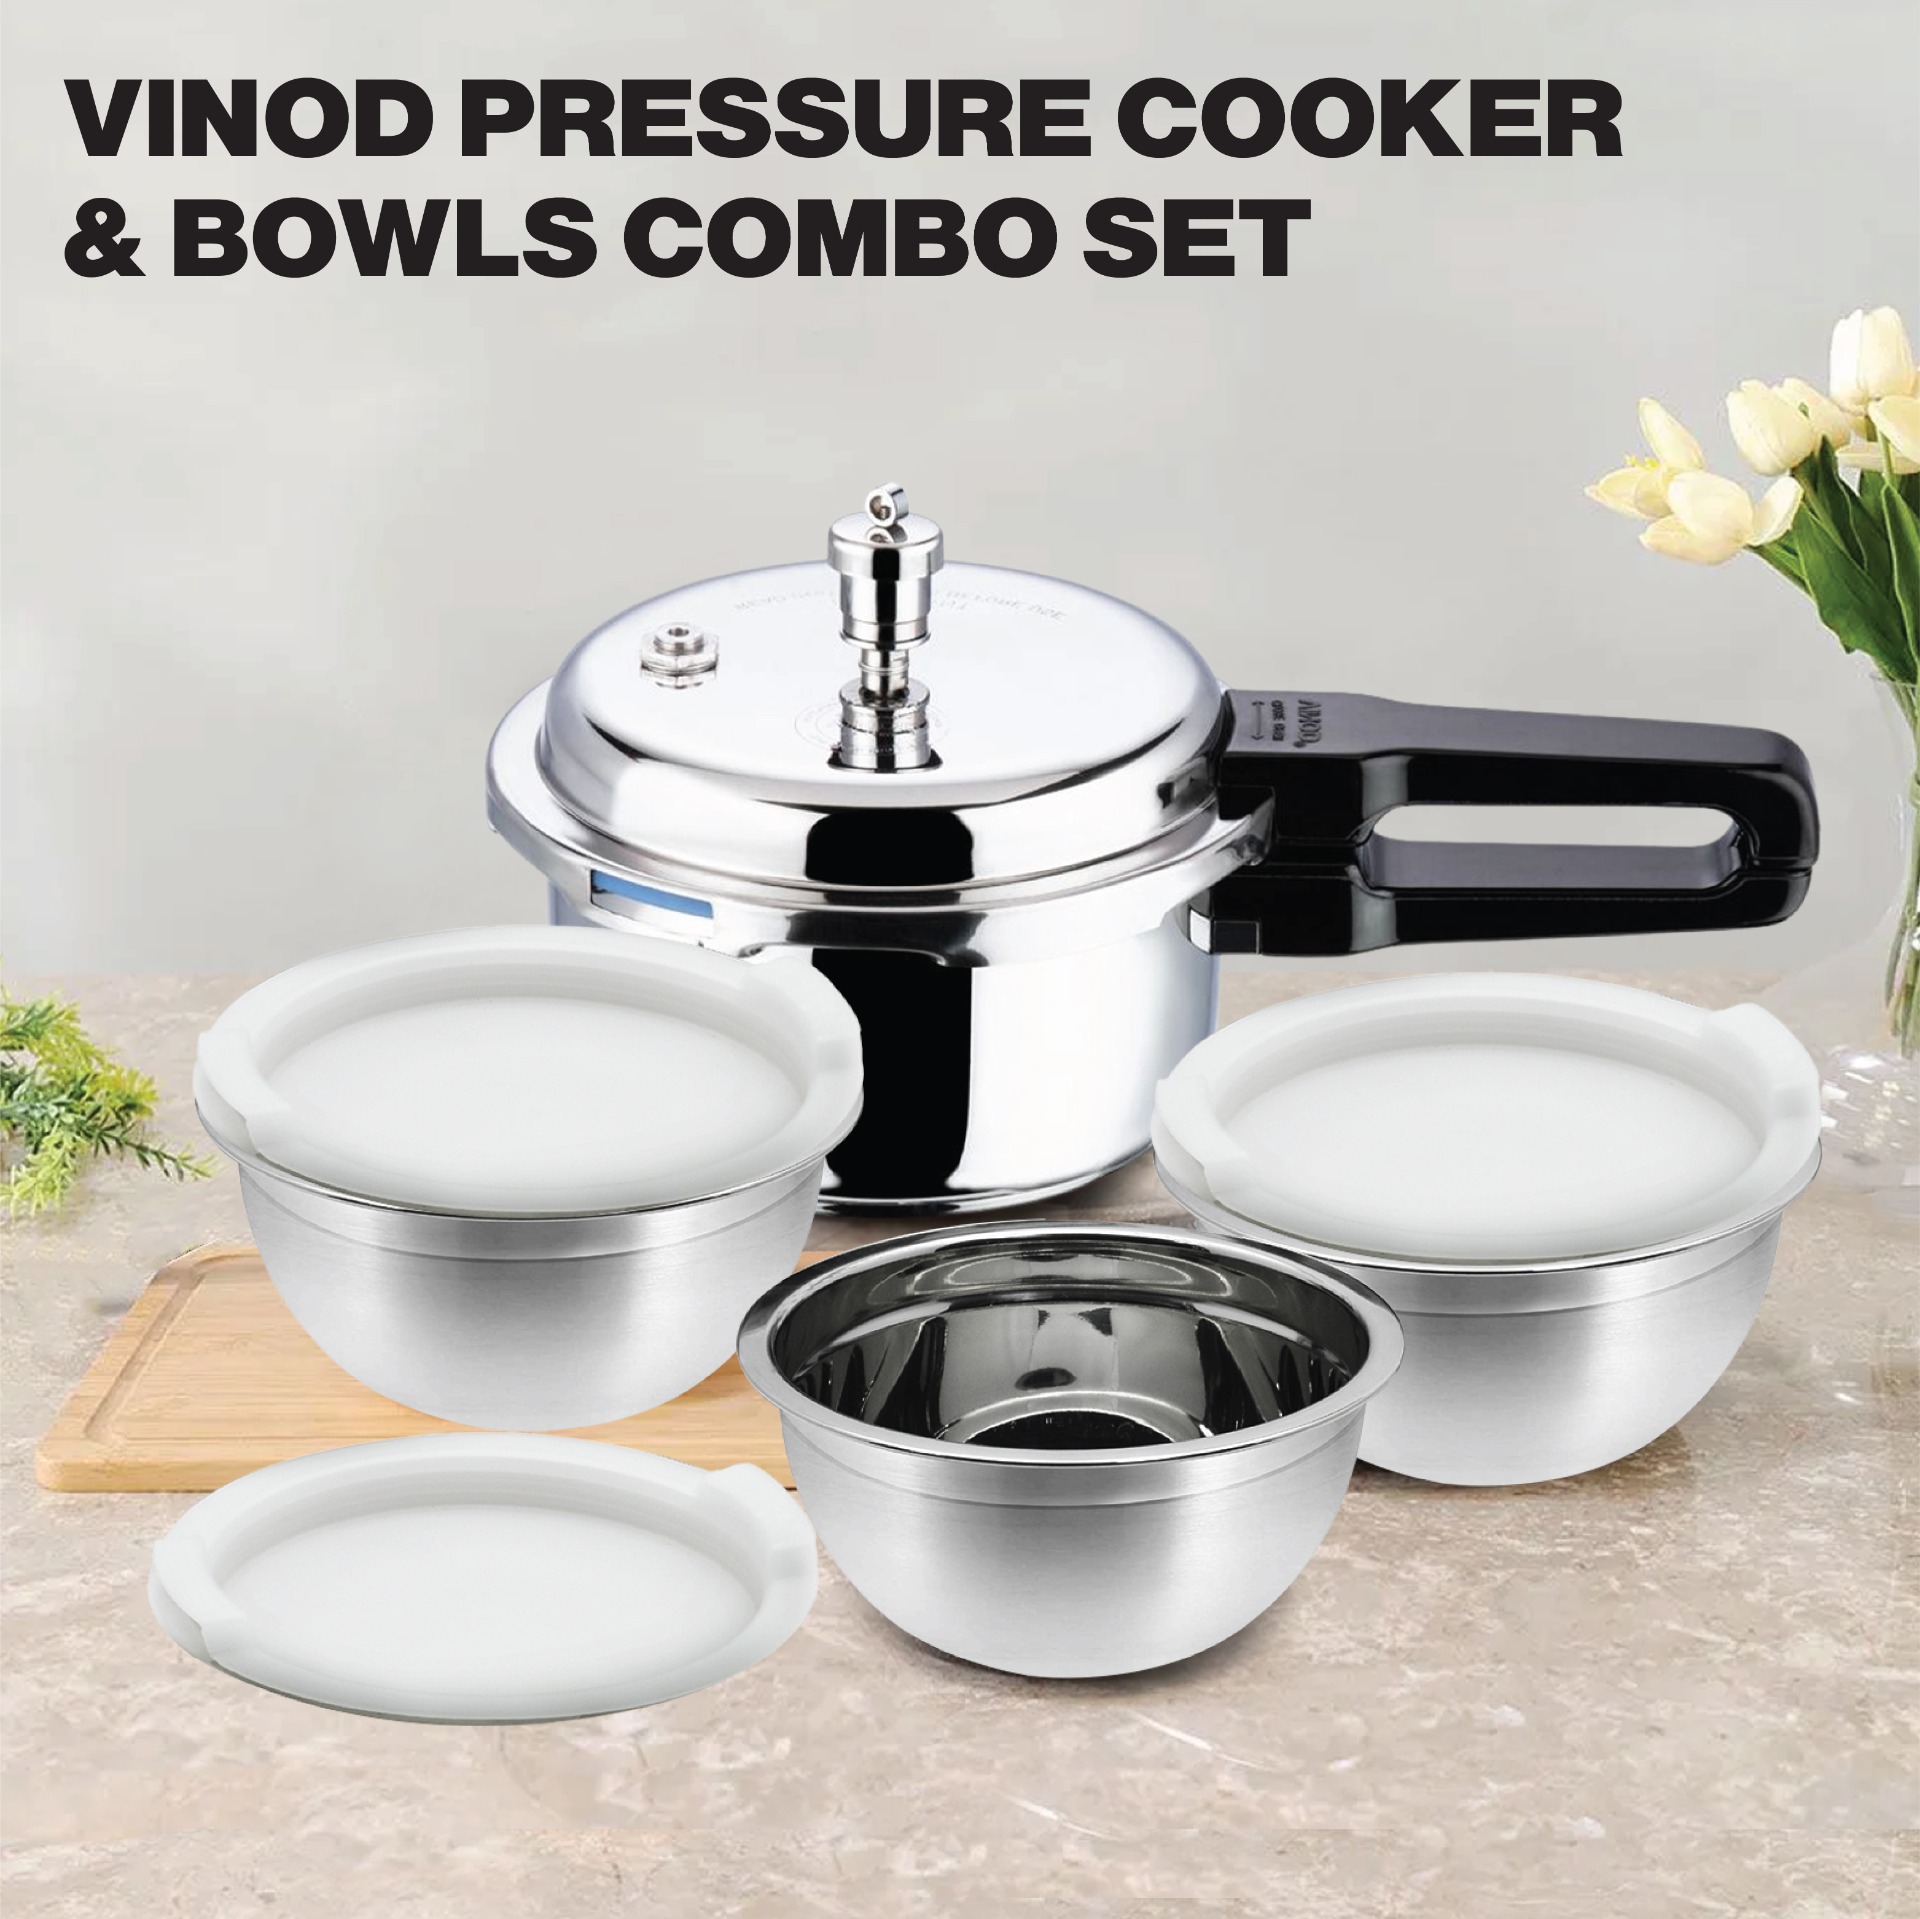 Vinod Pressure Cooker and Bowl Set Combo Set